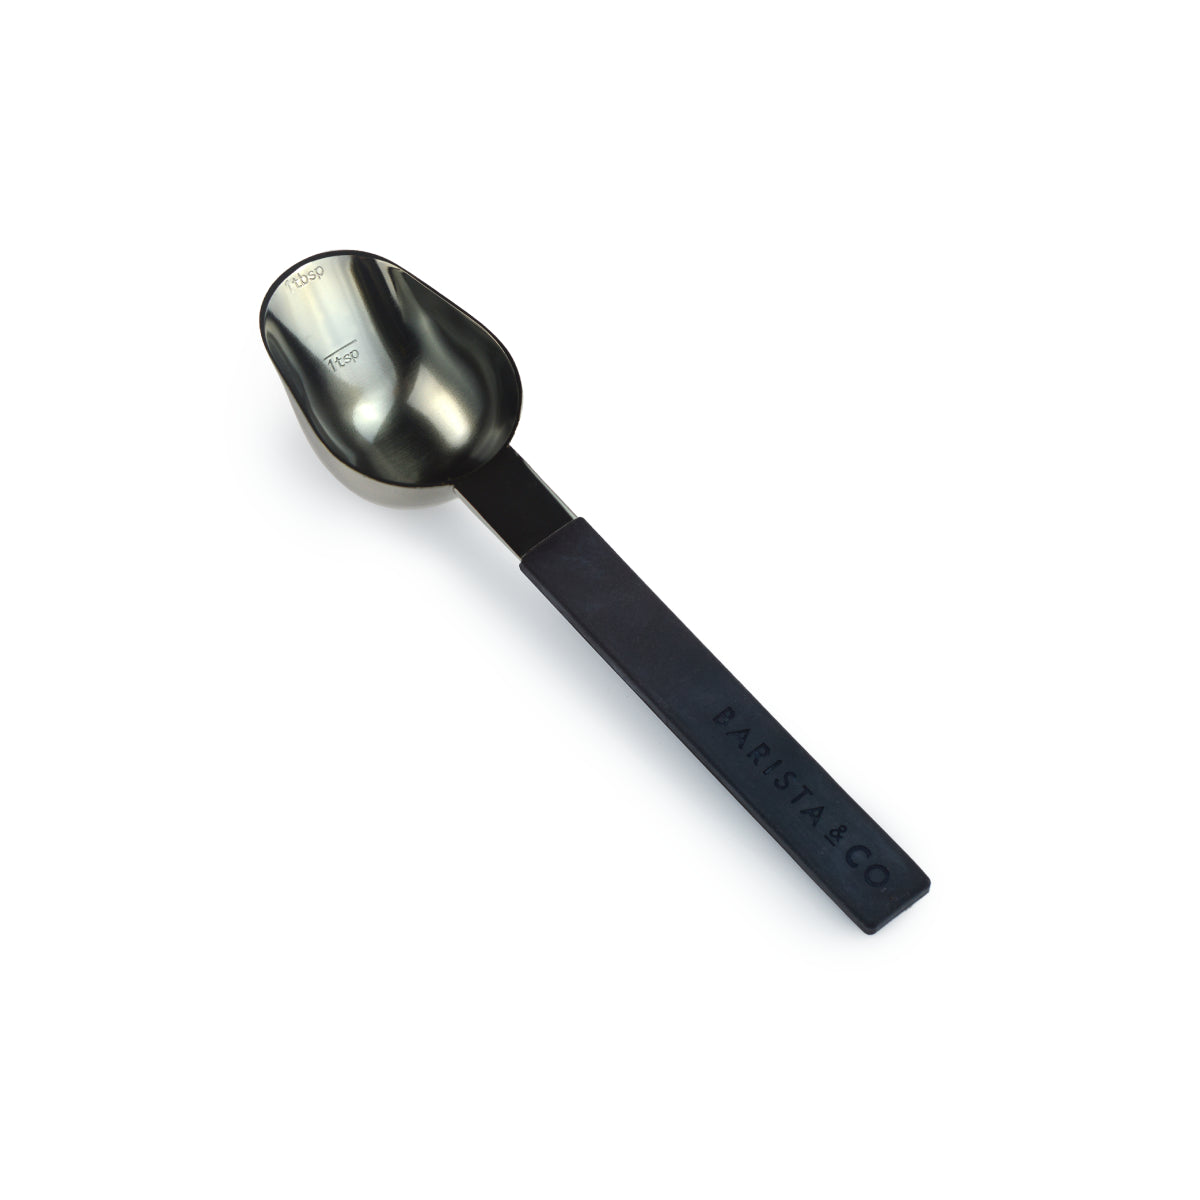 The Scoop Stainless Steel Coffee Measuring Spoon